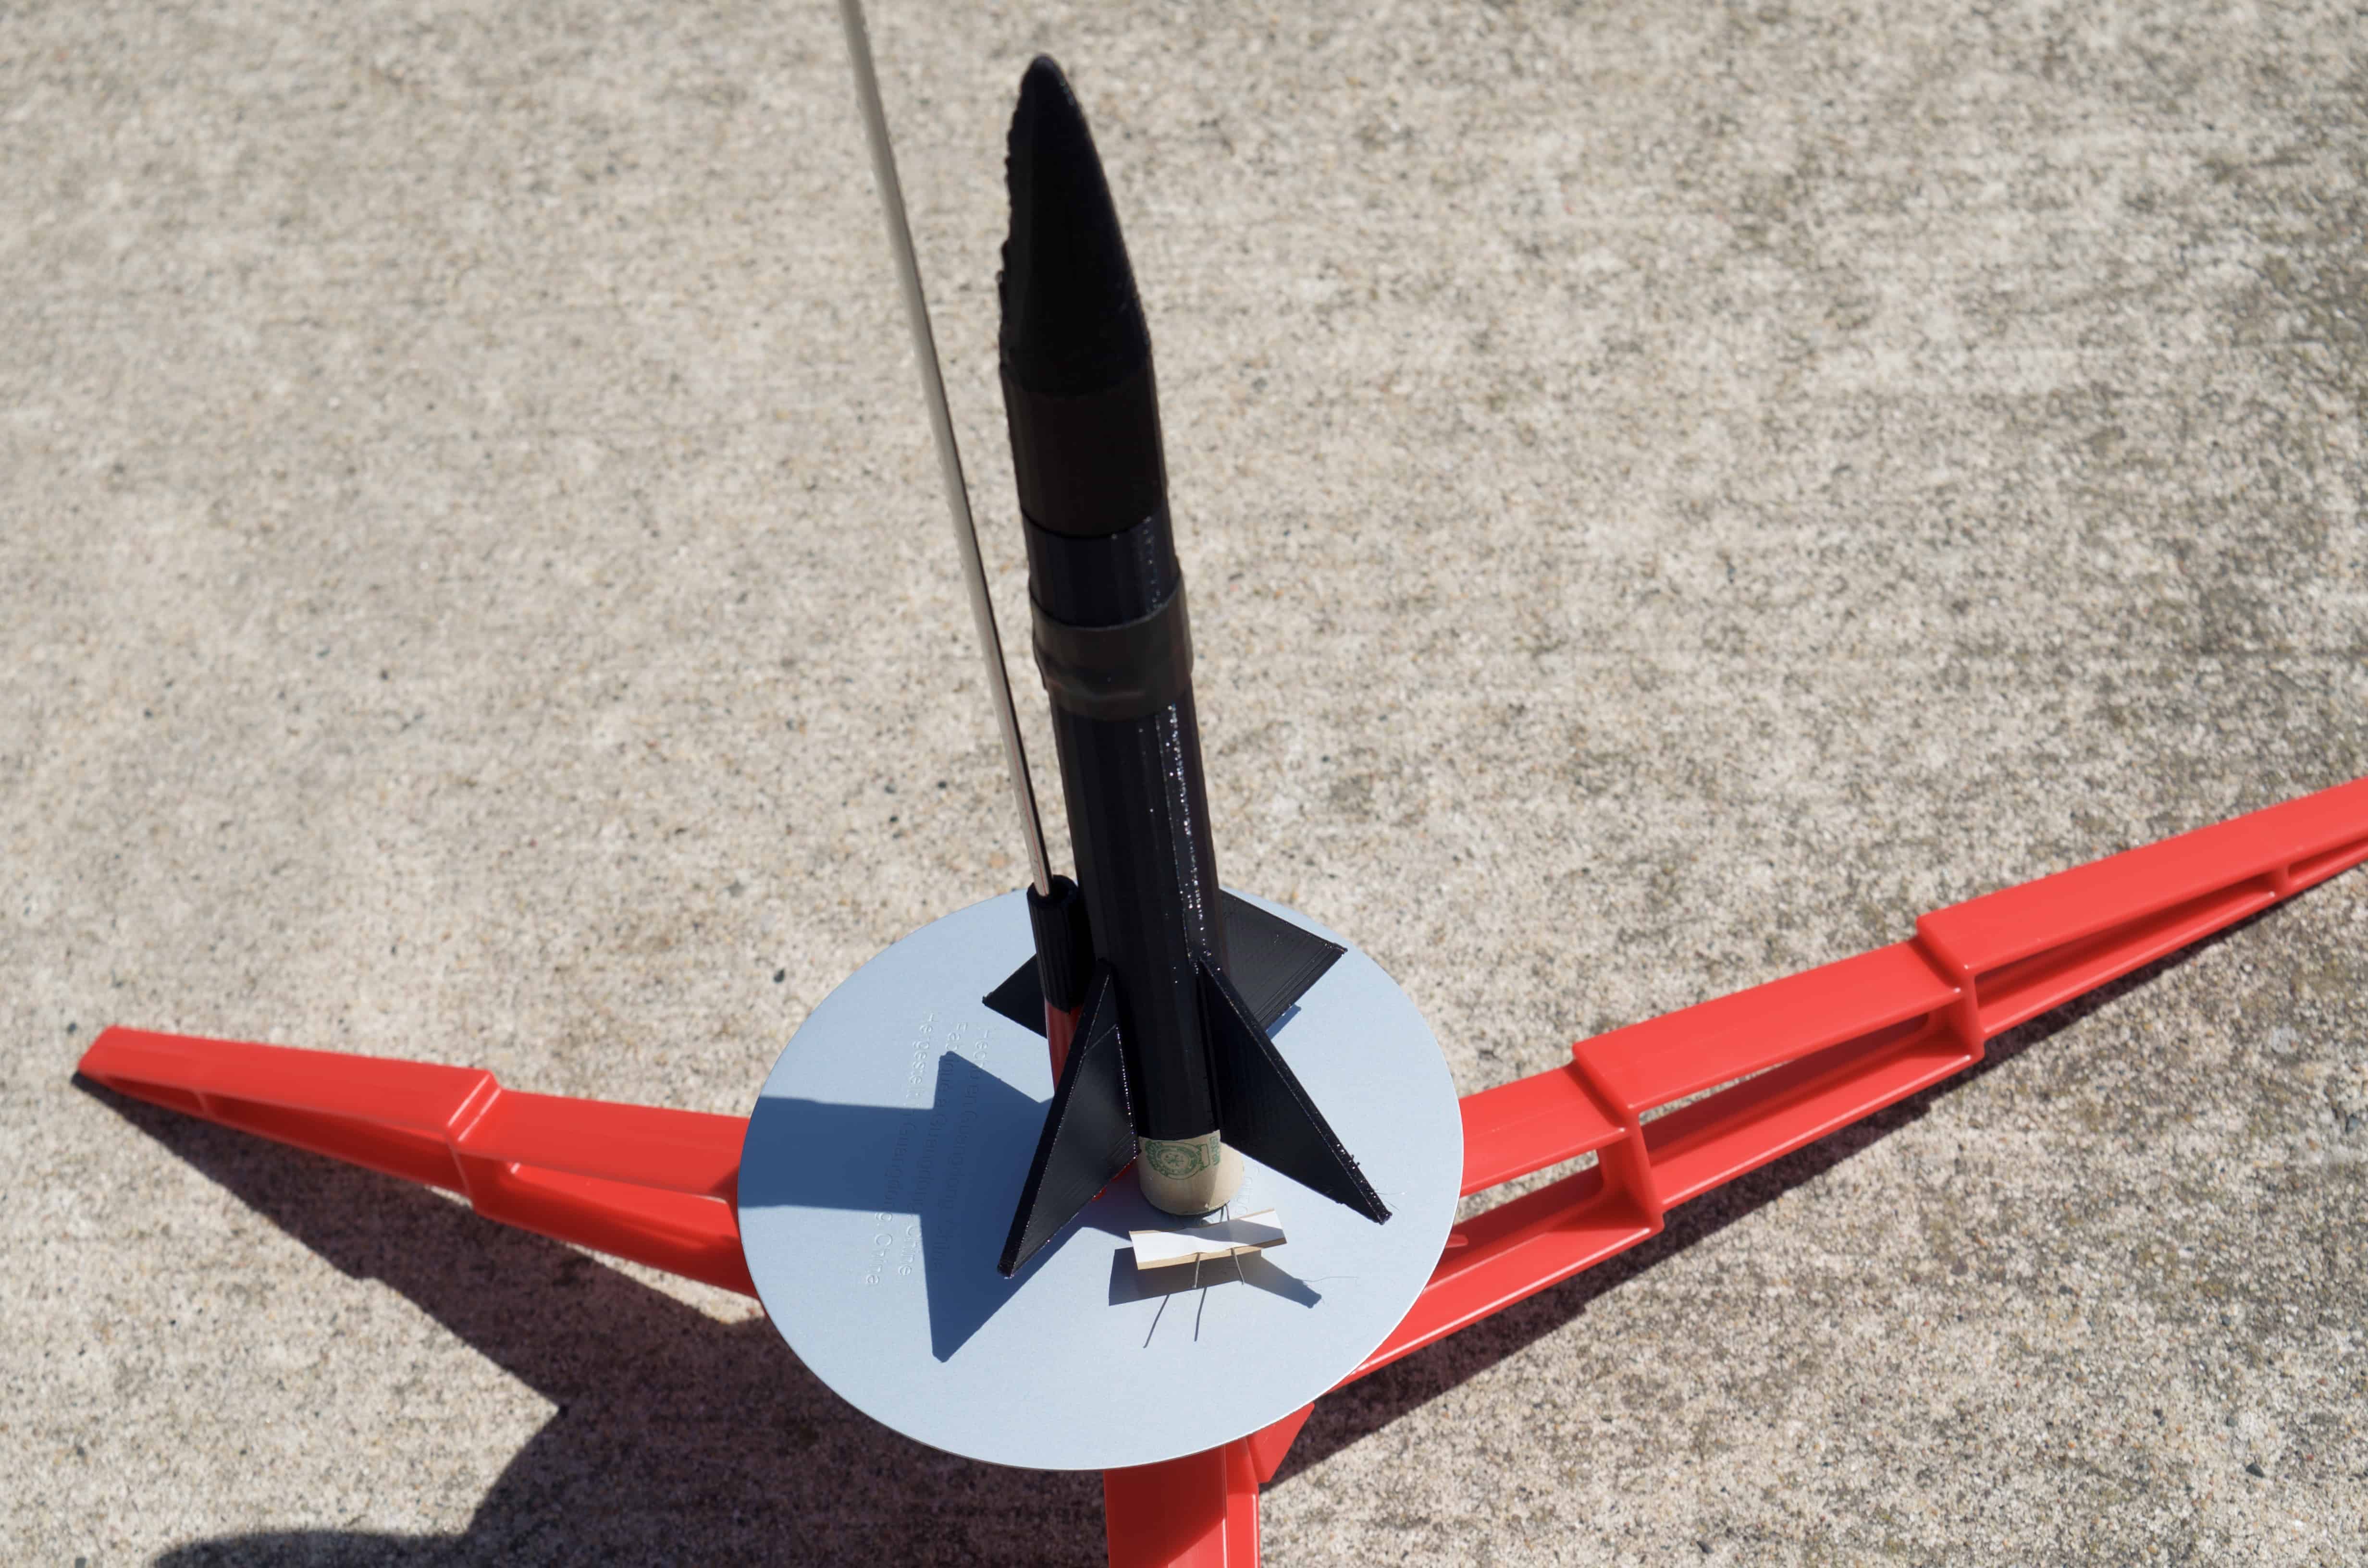 3D printed model rocket G-Class. 